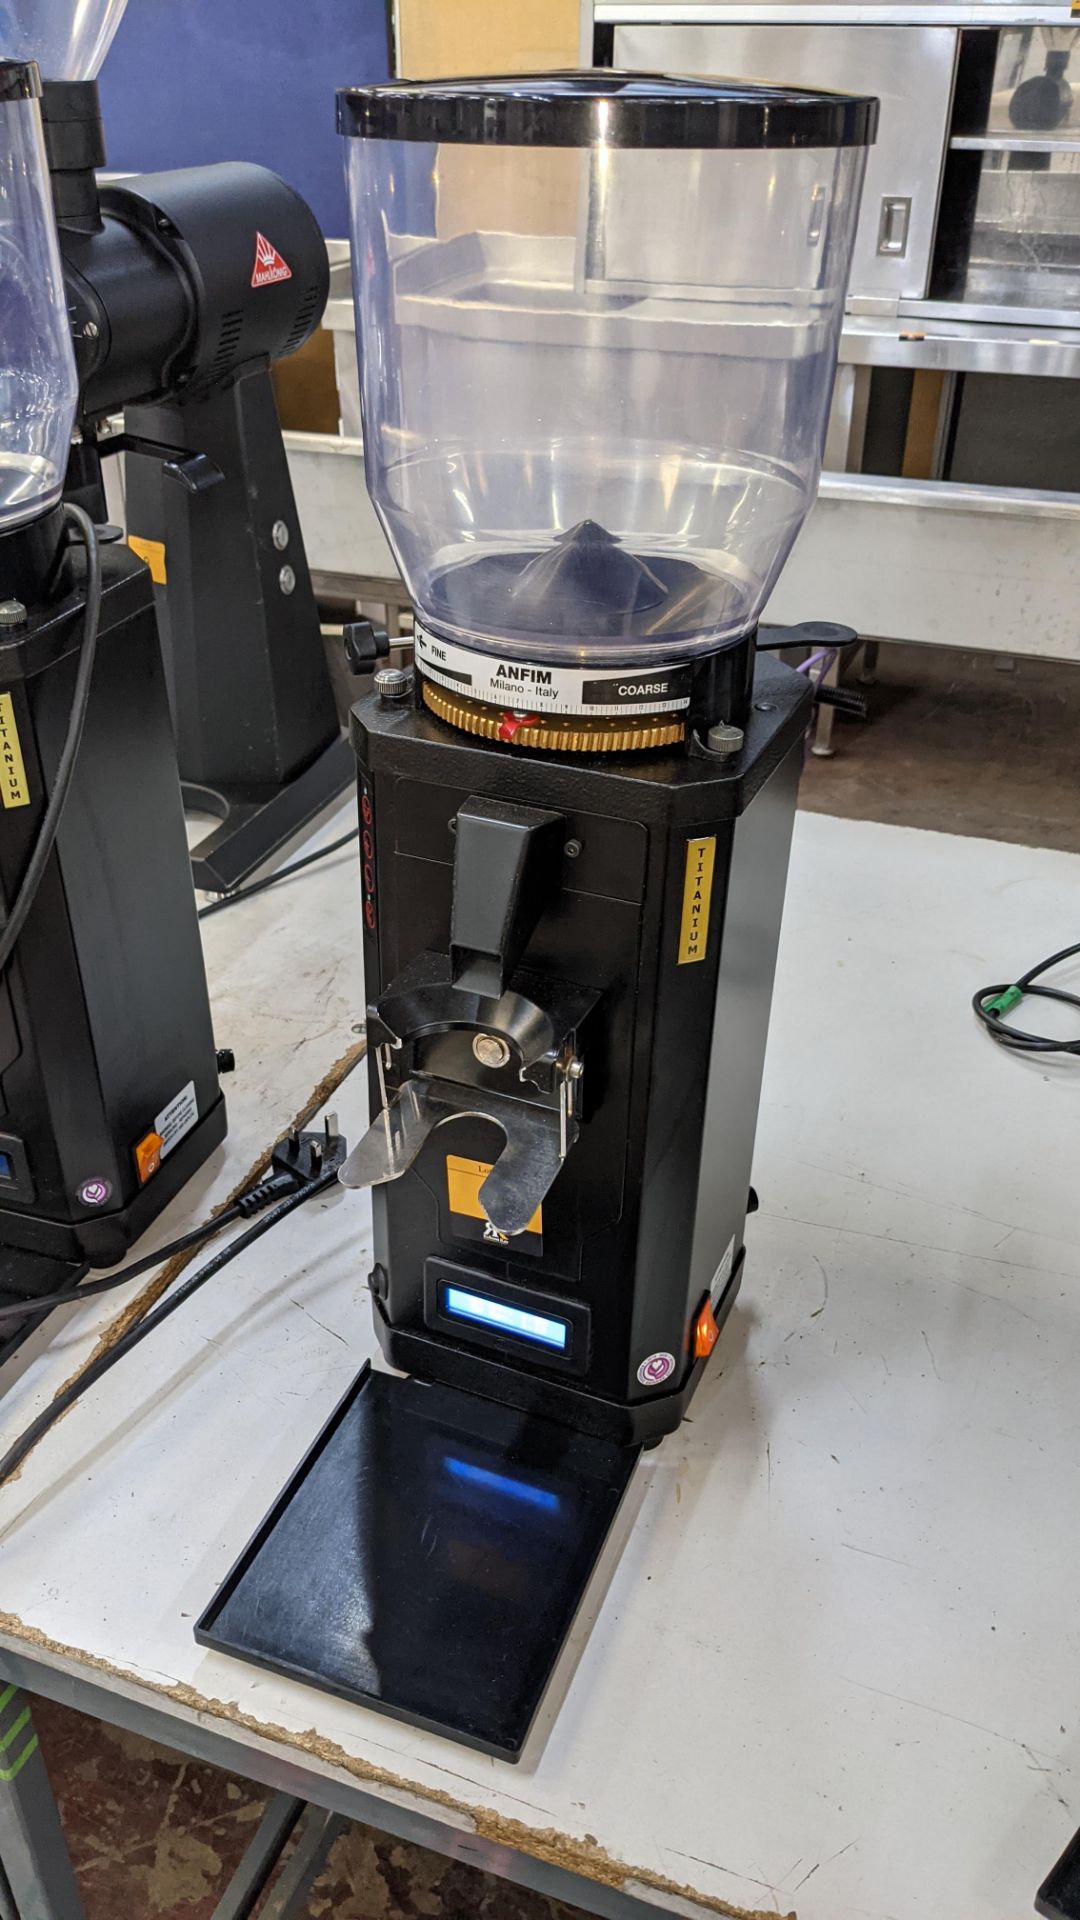 2019 Anfim model SPii titanium espresso grinder with digital display. Understood to have been purcha - Image 2 of 12